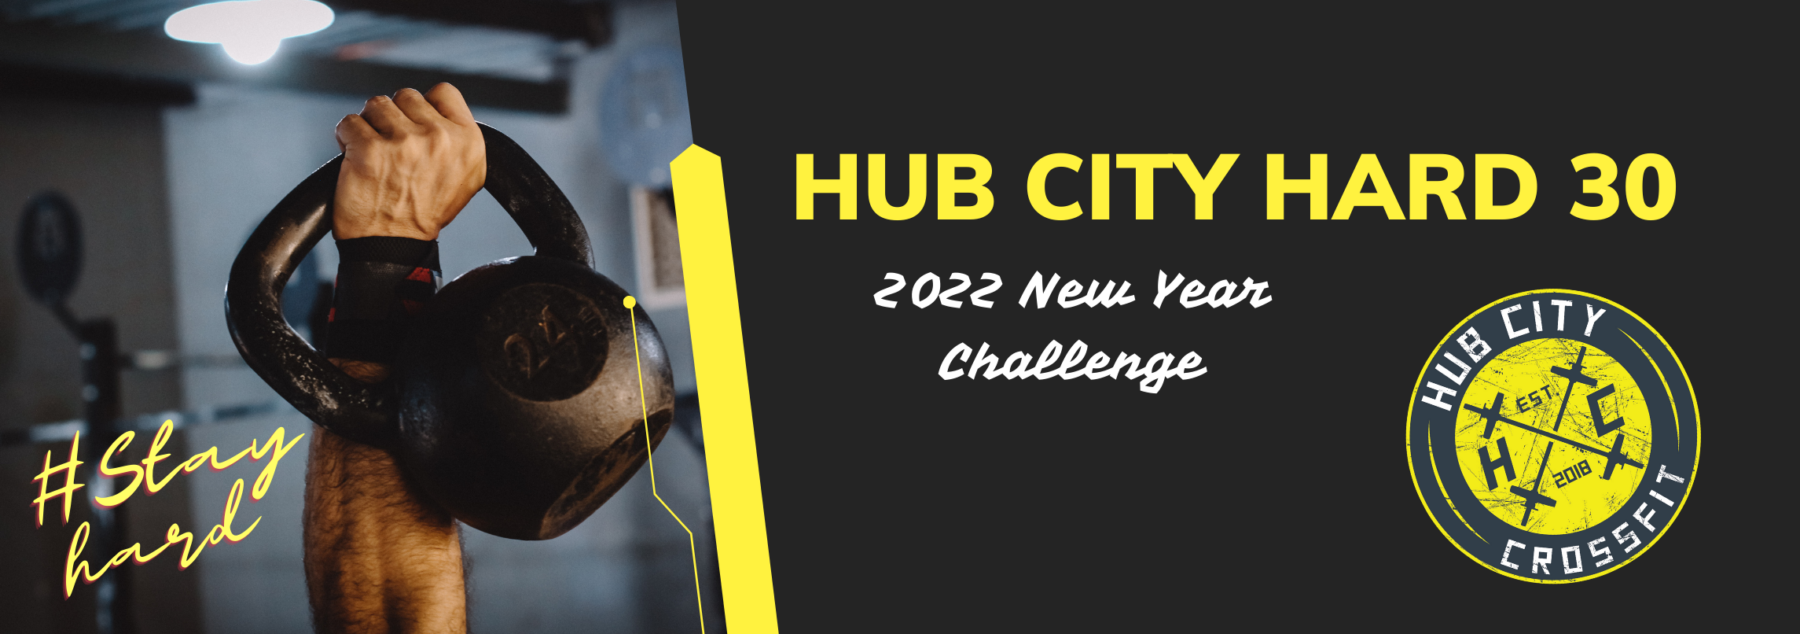 Hub City Hard 30